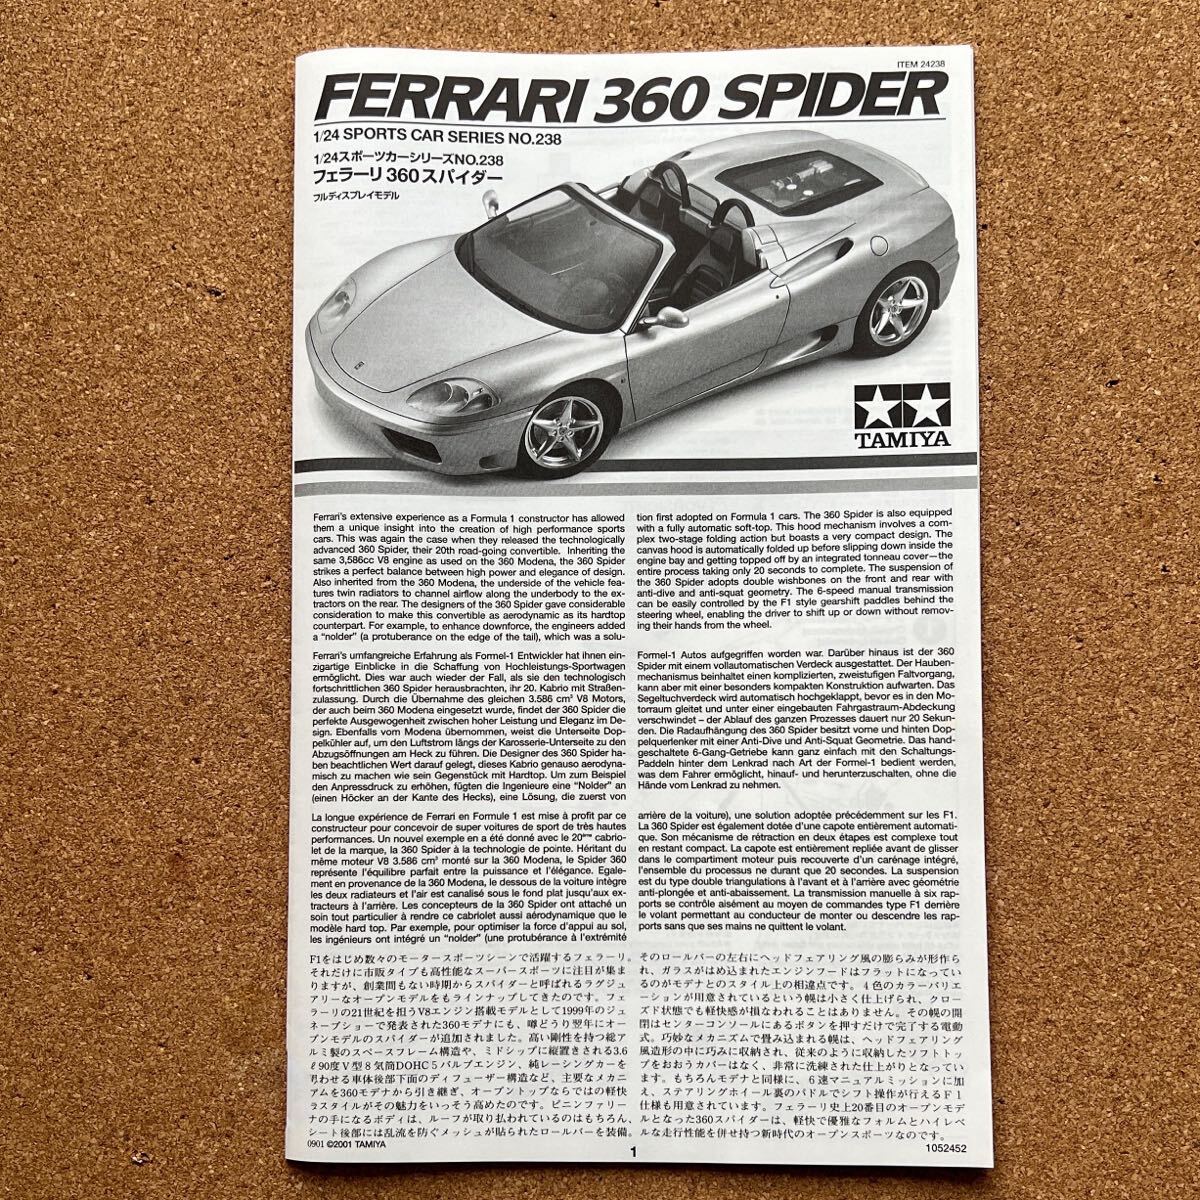  Tamiya Ferrari 360 Spider 1/24